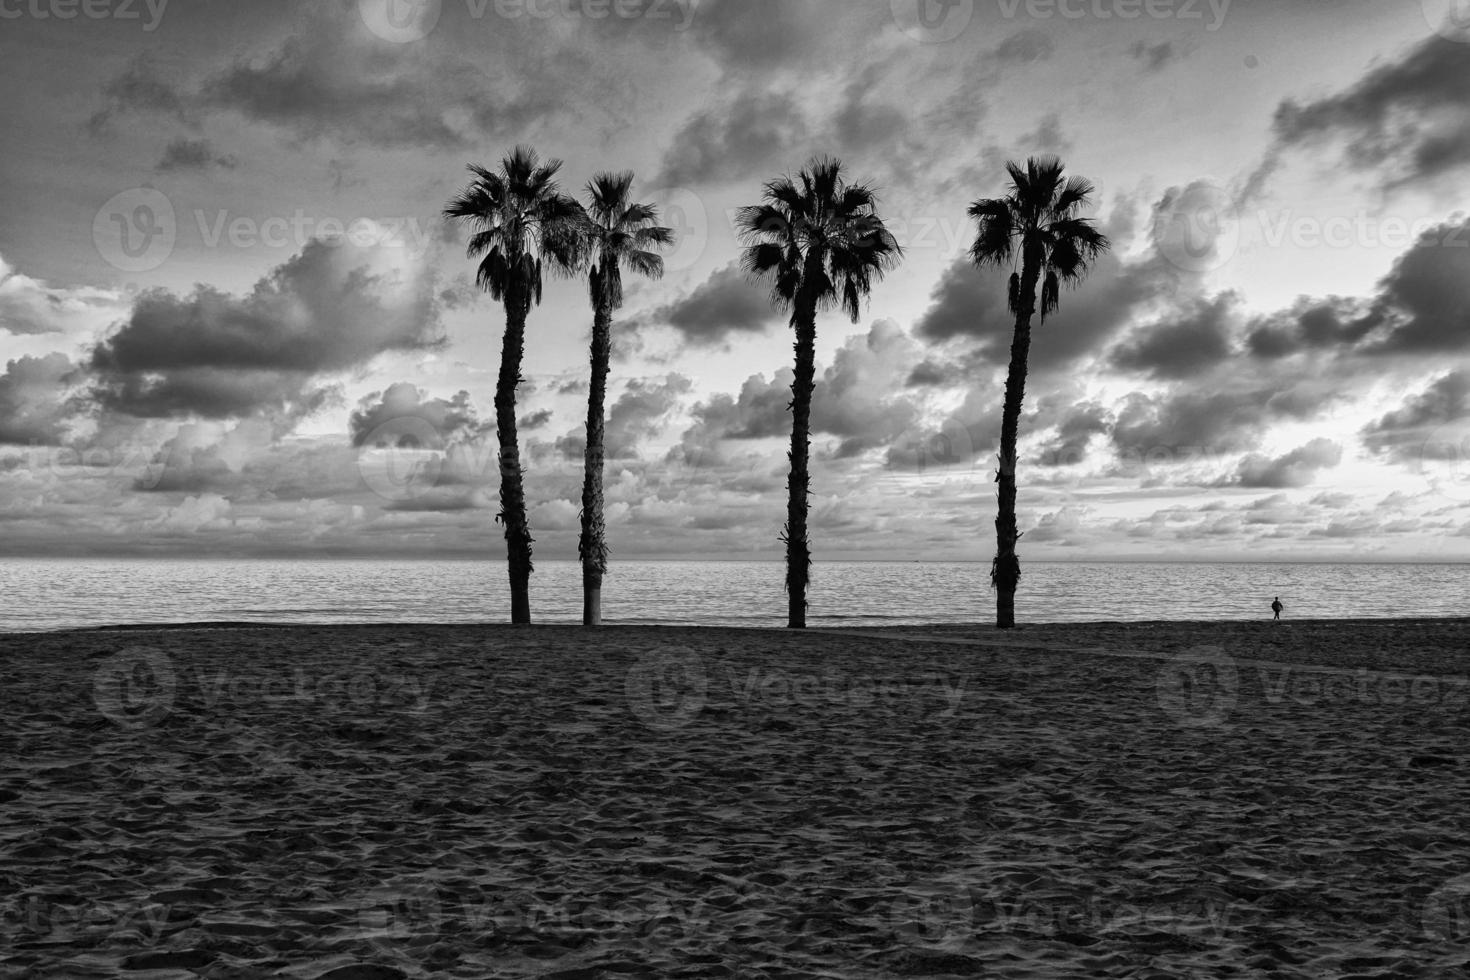 kust landschap vrede en stil zonsondergang en vier palm bomen Aan de strand foto